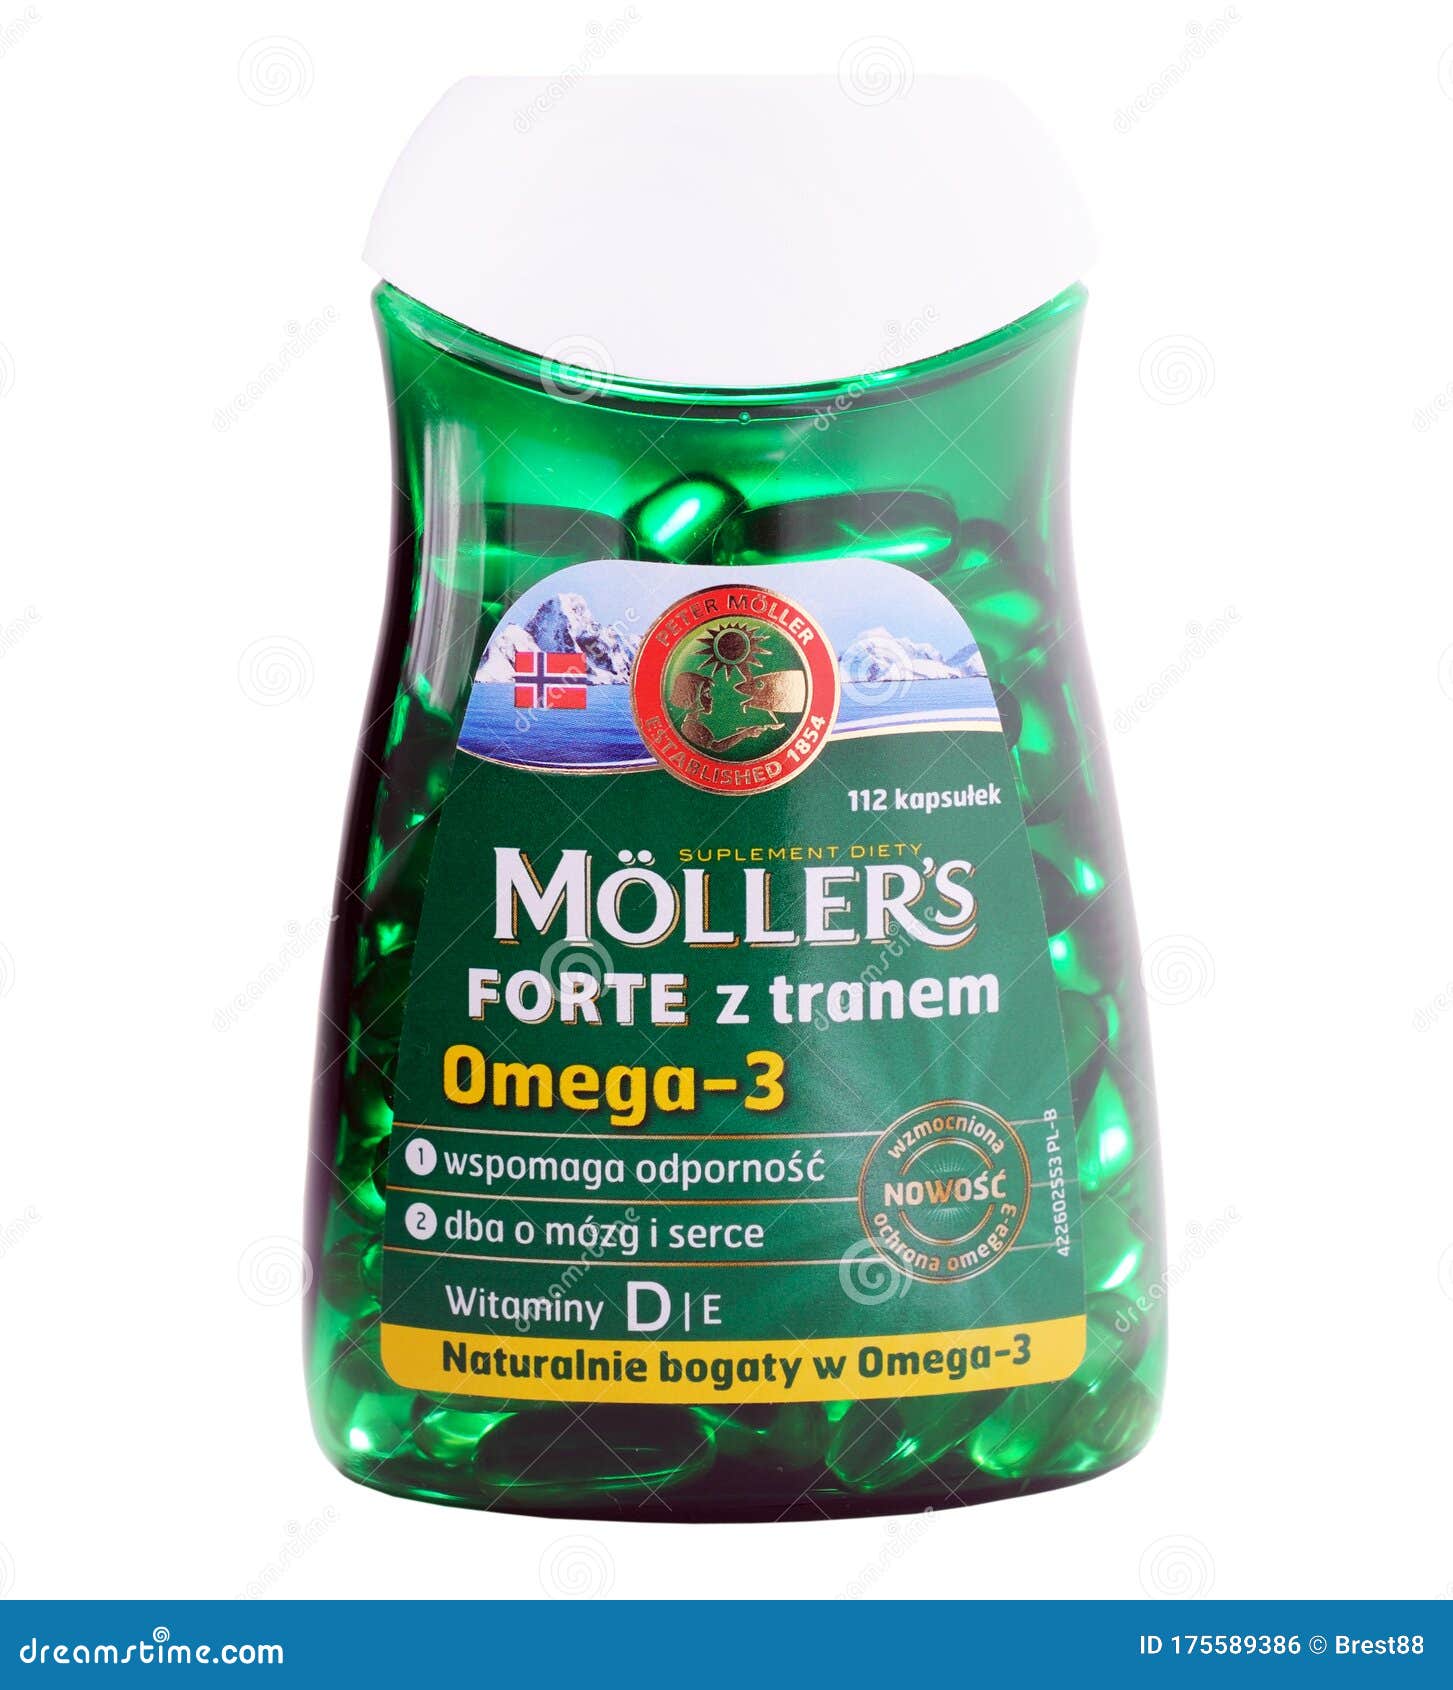 Mollers fish oil